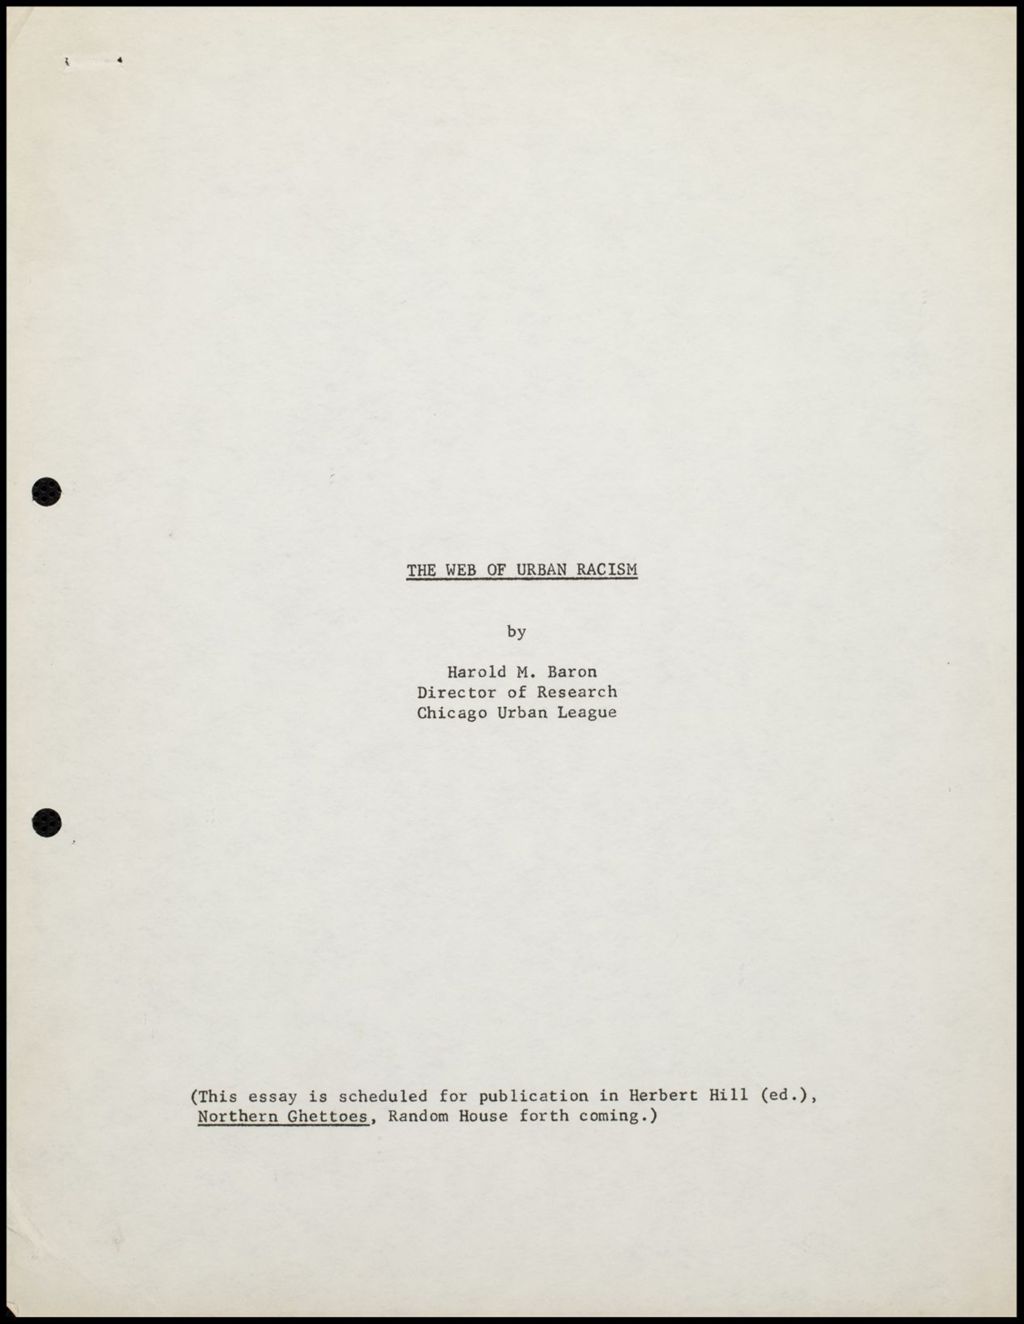 Miniature of CUL report Negro's in Policy Making, 1968 (Folder III-2486)